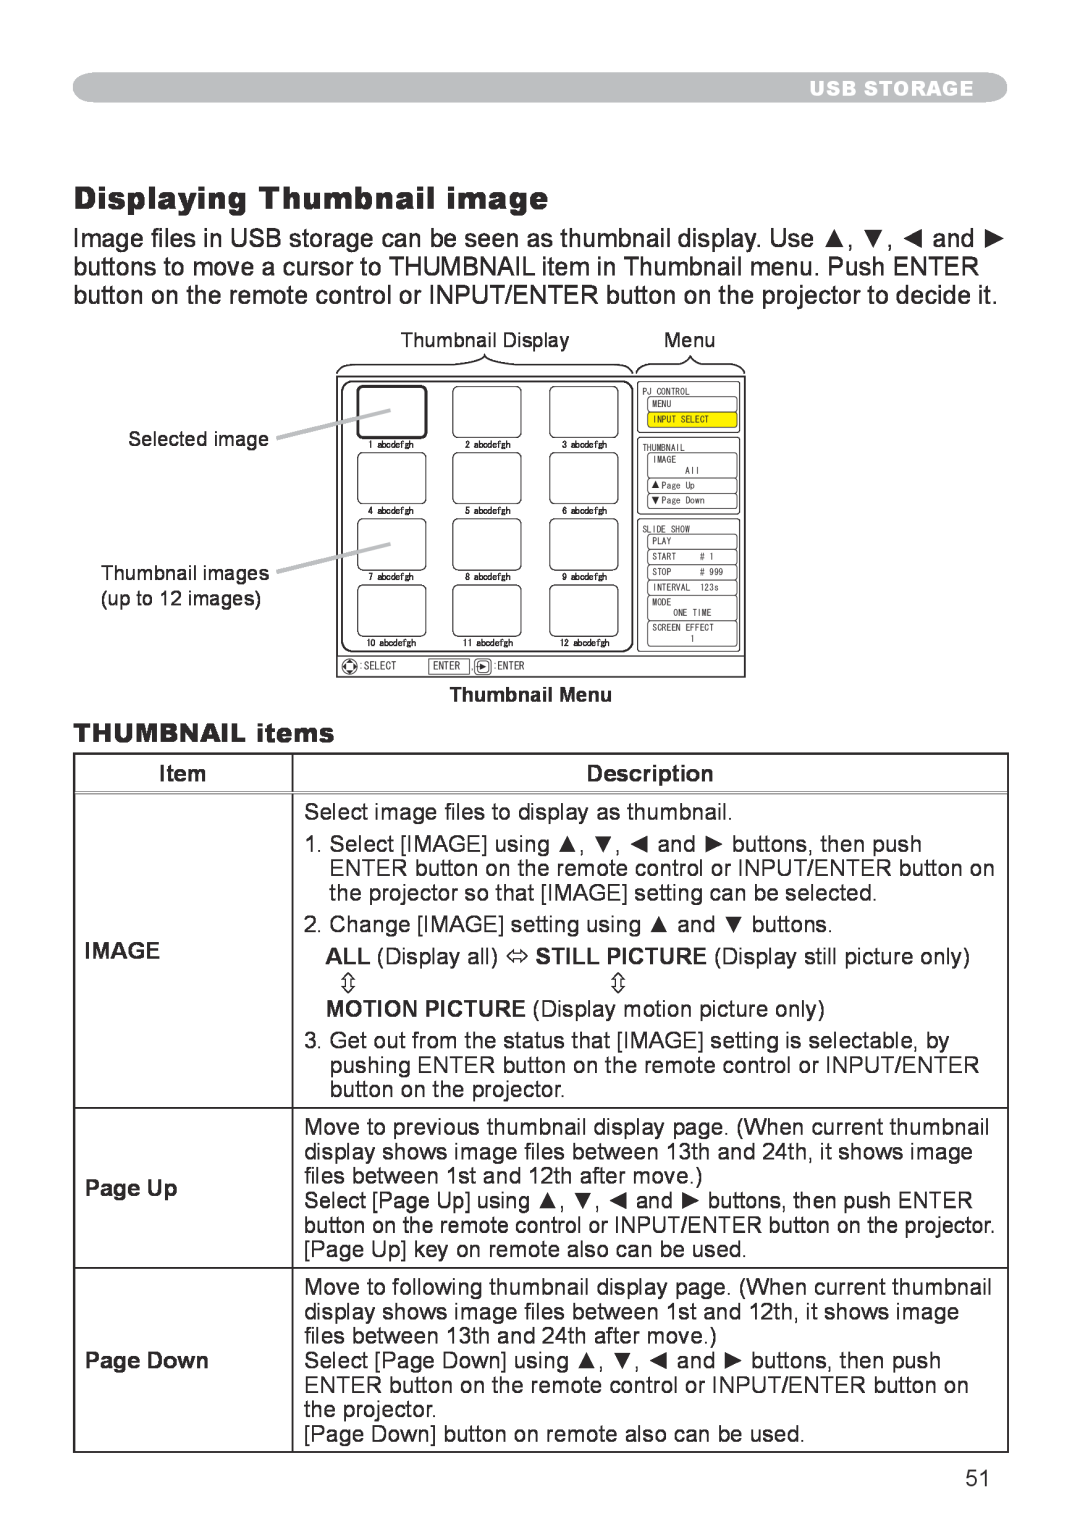 3M X20 manual Displaying Thumbnail image, THUMBNAIL items, Description, Image, Page Up, Page Down 